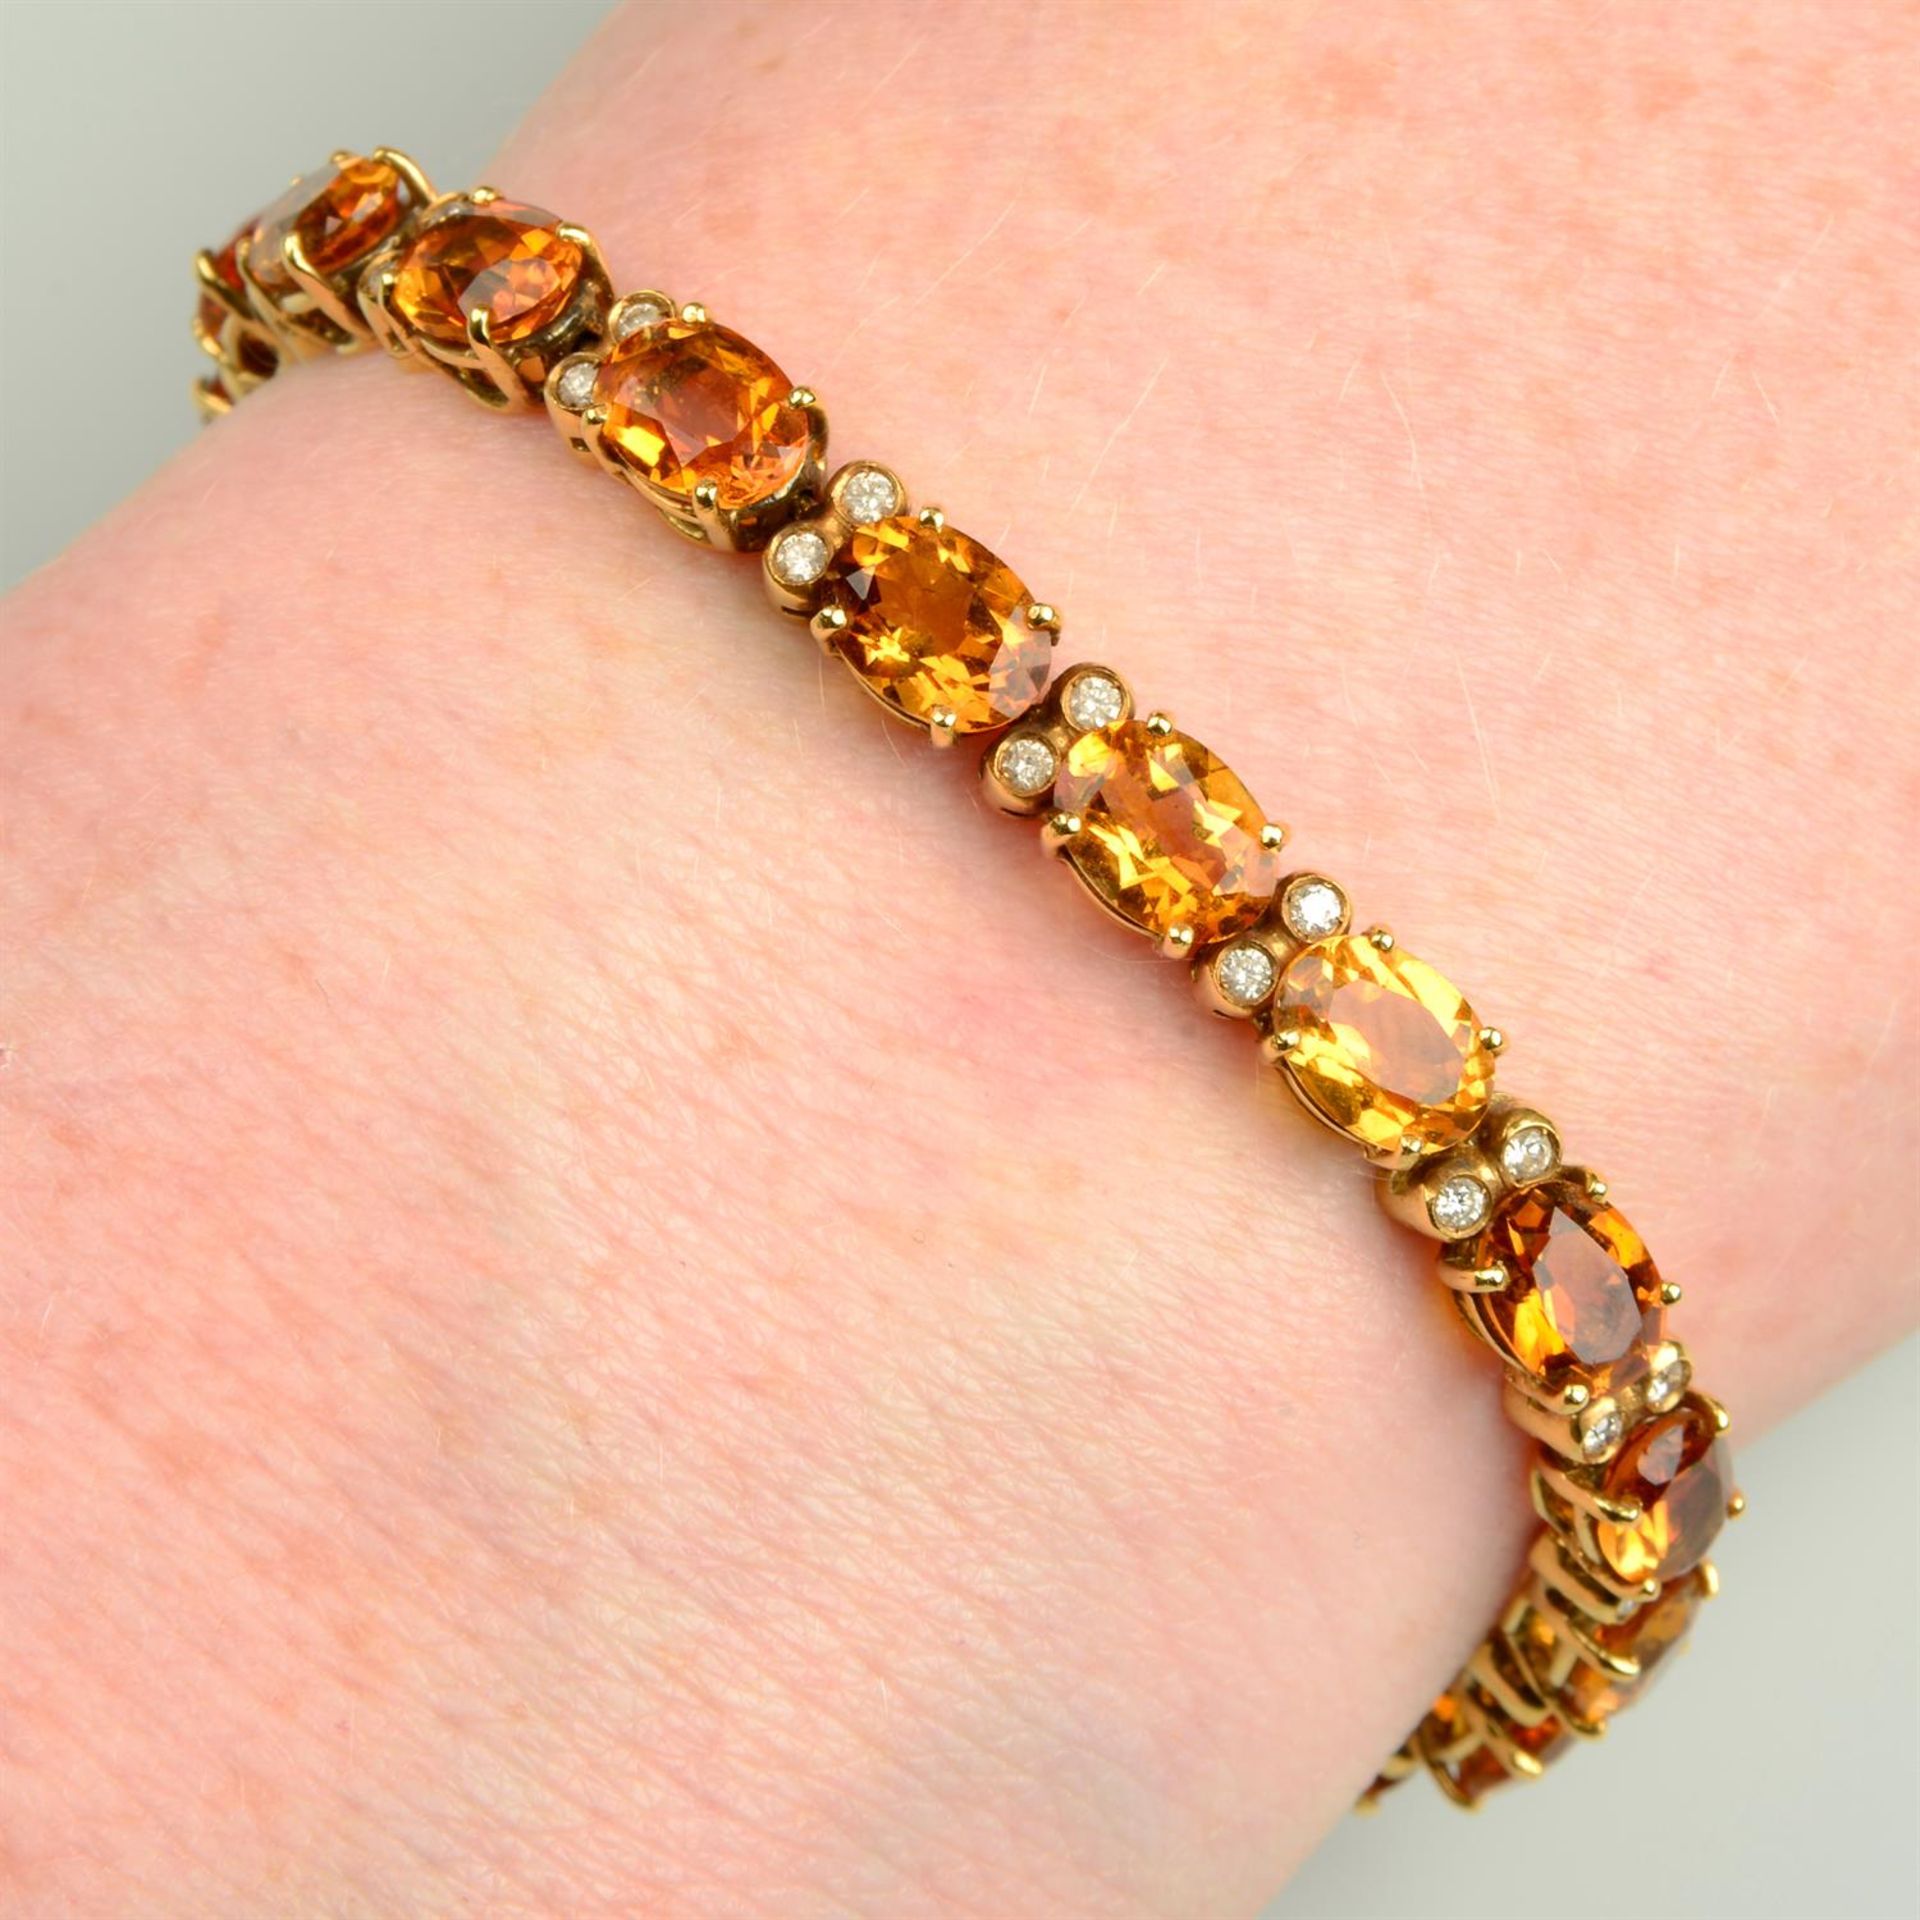 A citrine bracelet, with brilliant-cut diamond spacers.